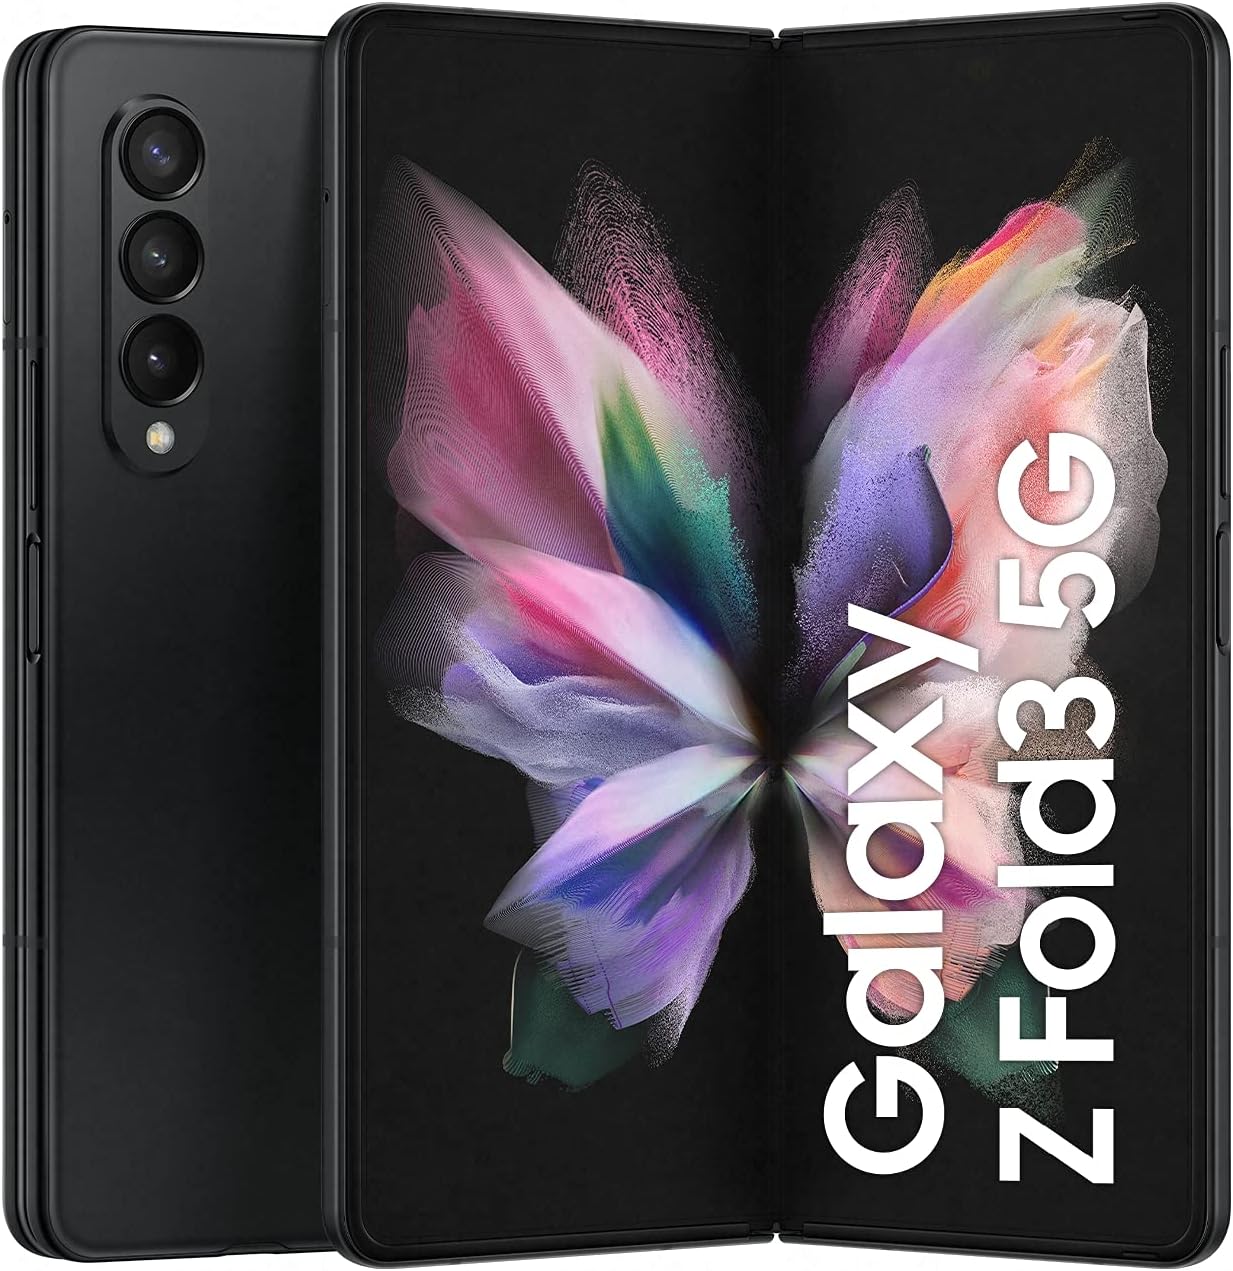 SAMSUNG Galaxy Z Fold3 5G in Phantom Black, 512GB Storage, 12GB RAM - Shape of tomorrow's design, now more portable and durable. 8806092562387